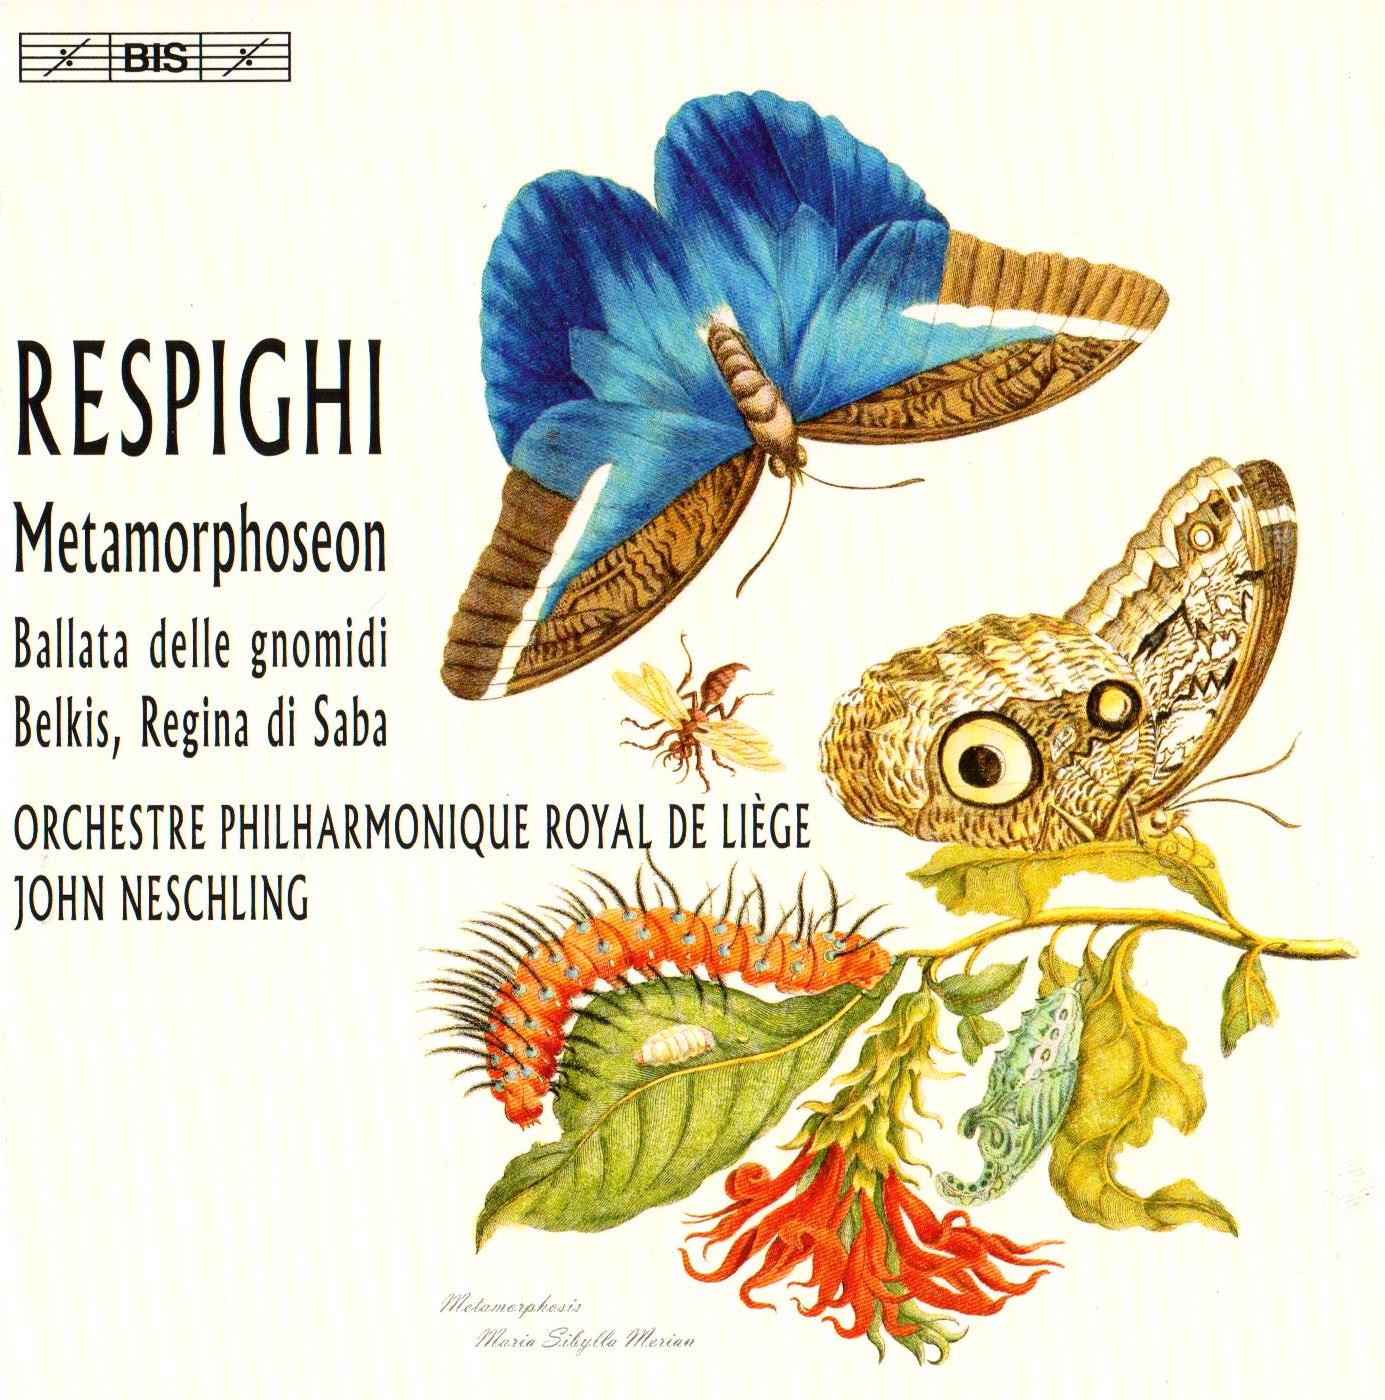 RESPIGHI - Metamorphoseon - Ballata delle gnomidi - Belkis, Regina di Saba, Suite